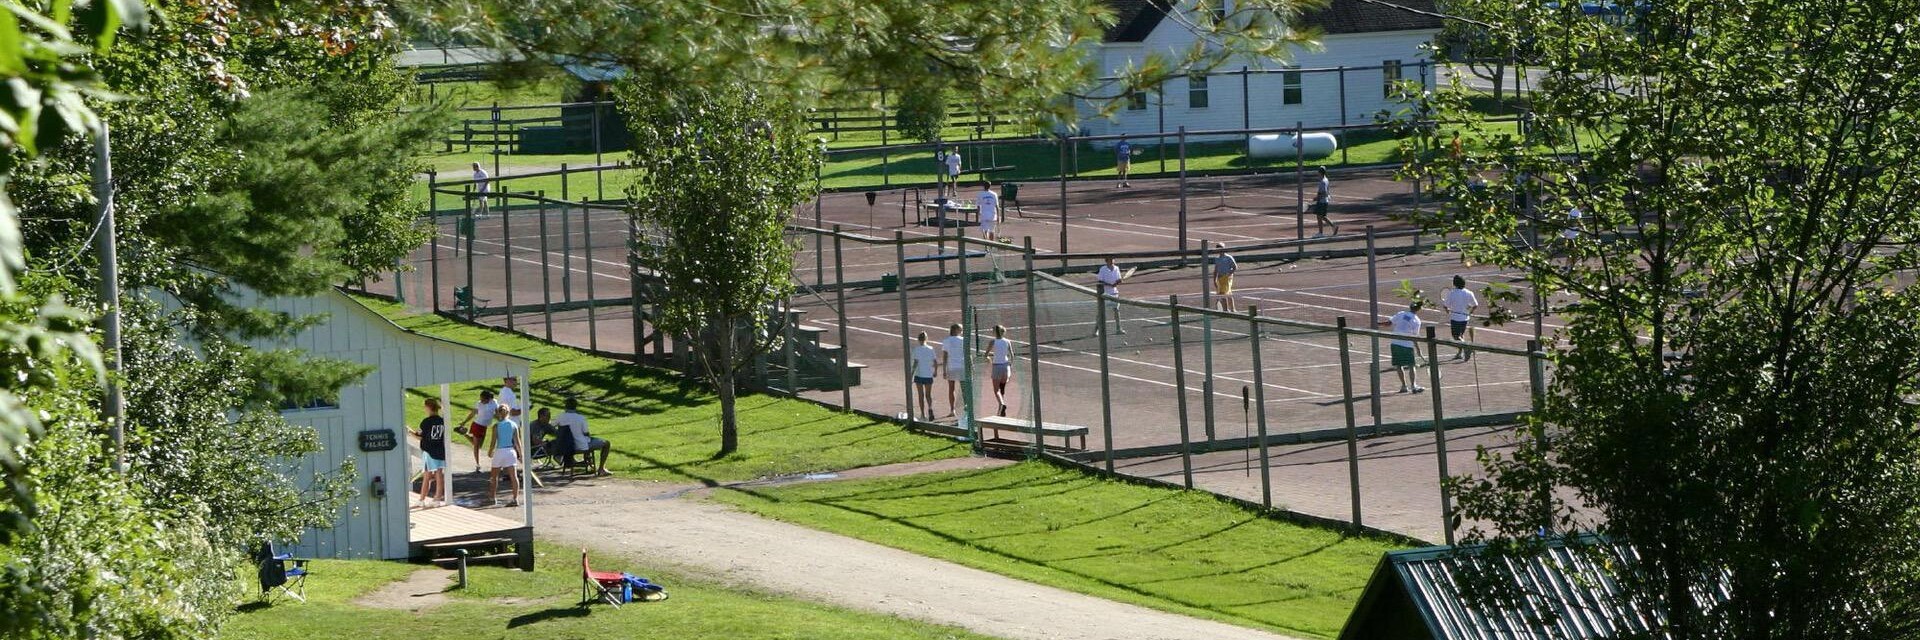 tennis courts at windridge